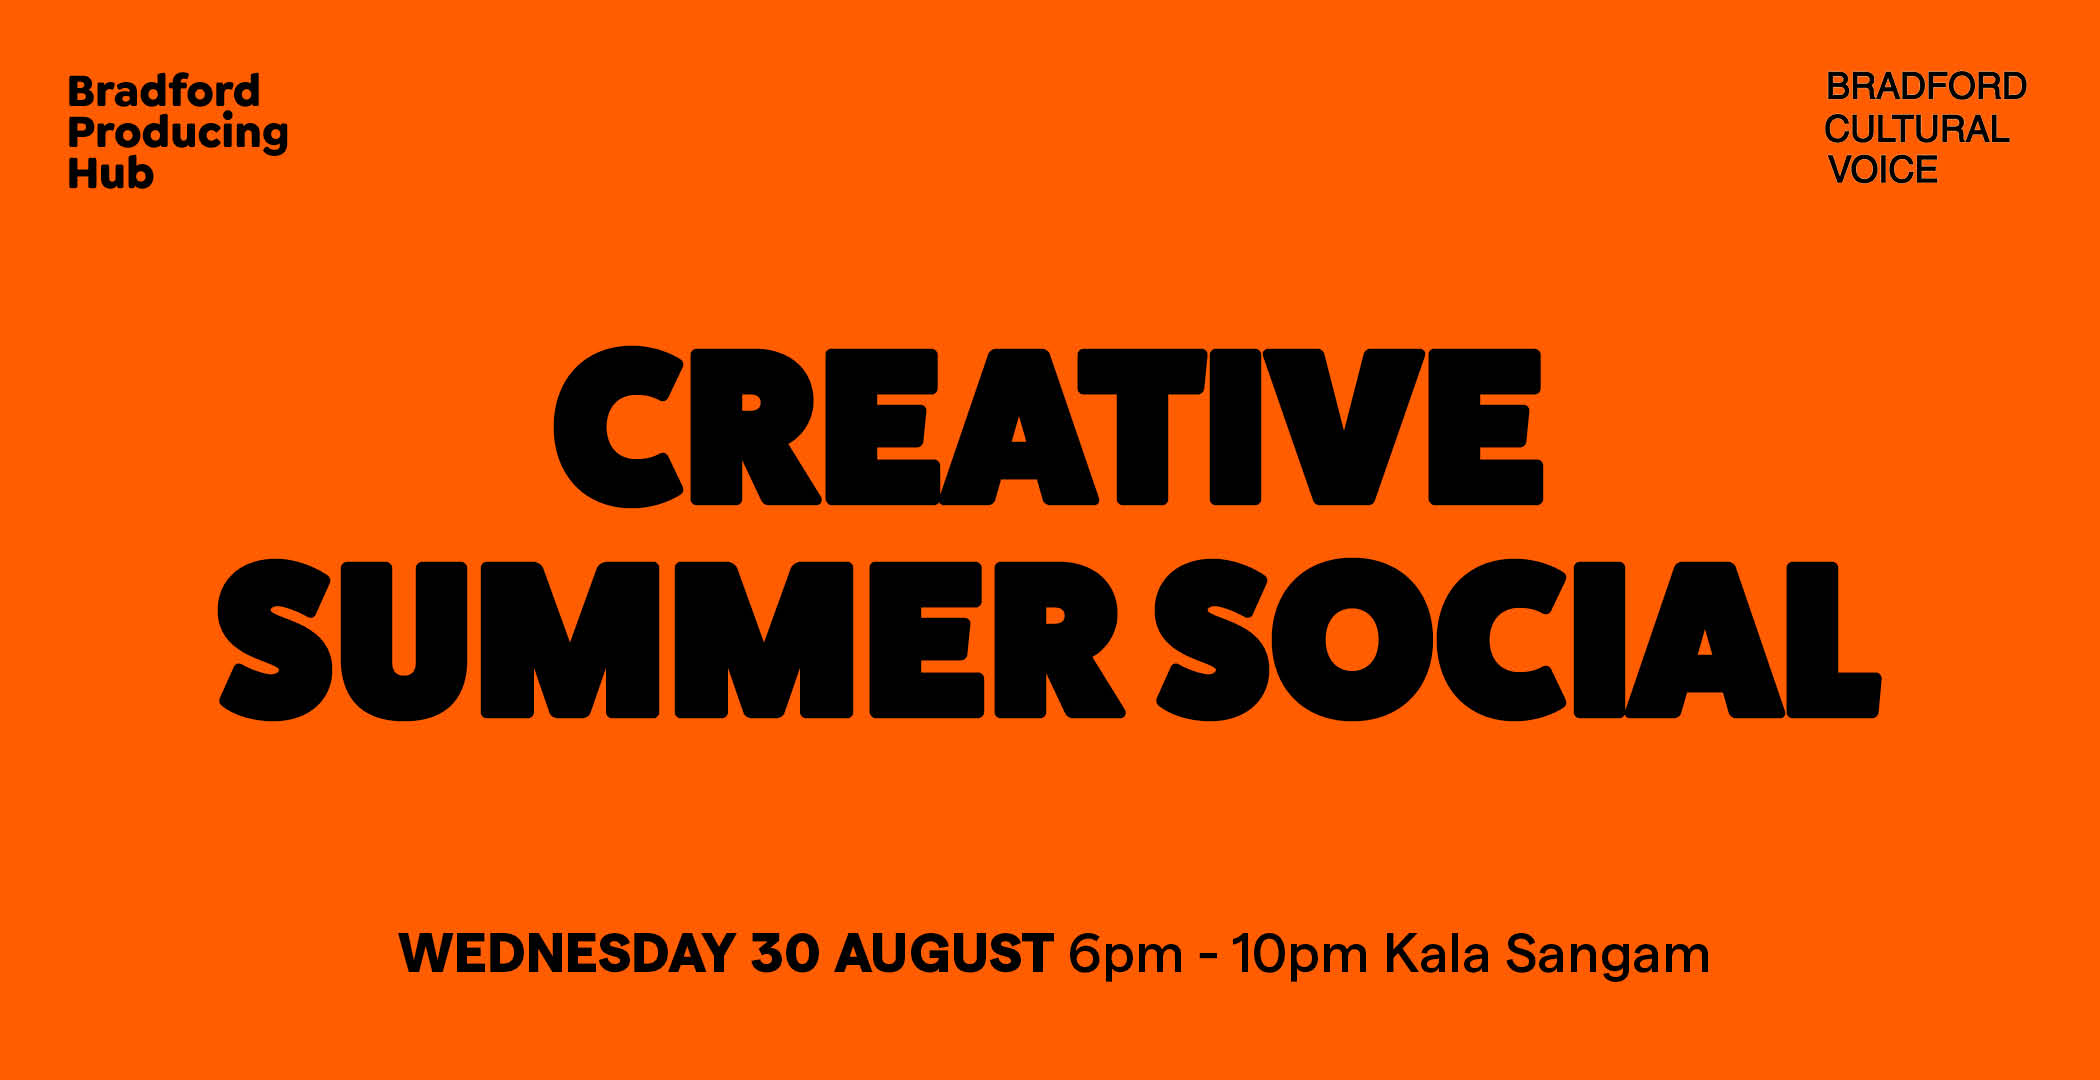 Creative Summer Social, Wednesday 30 August, 6pm - 10pm, Kala Sangam